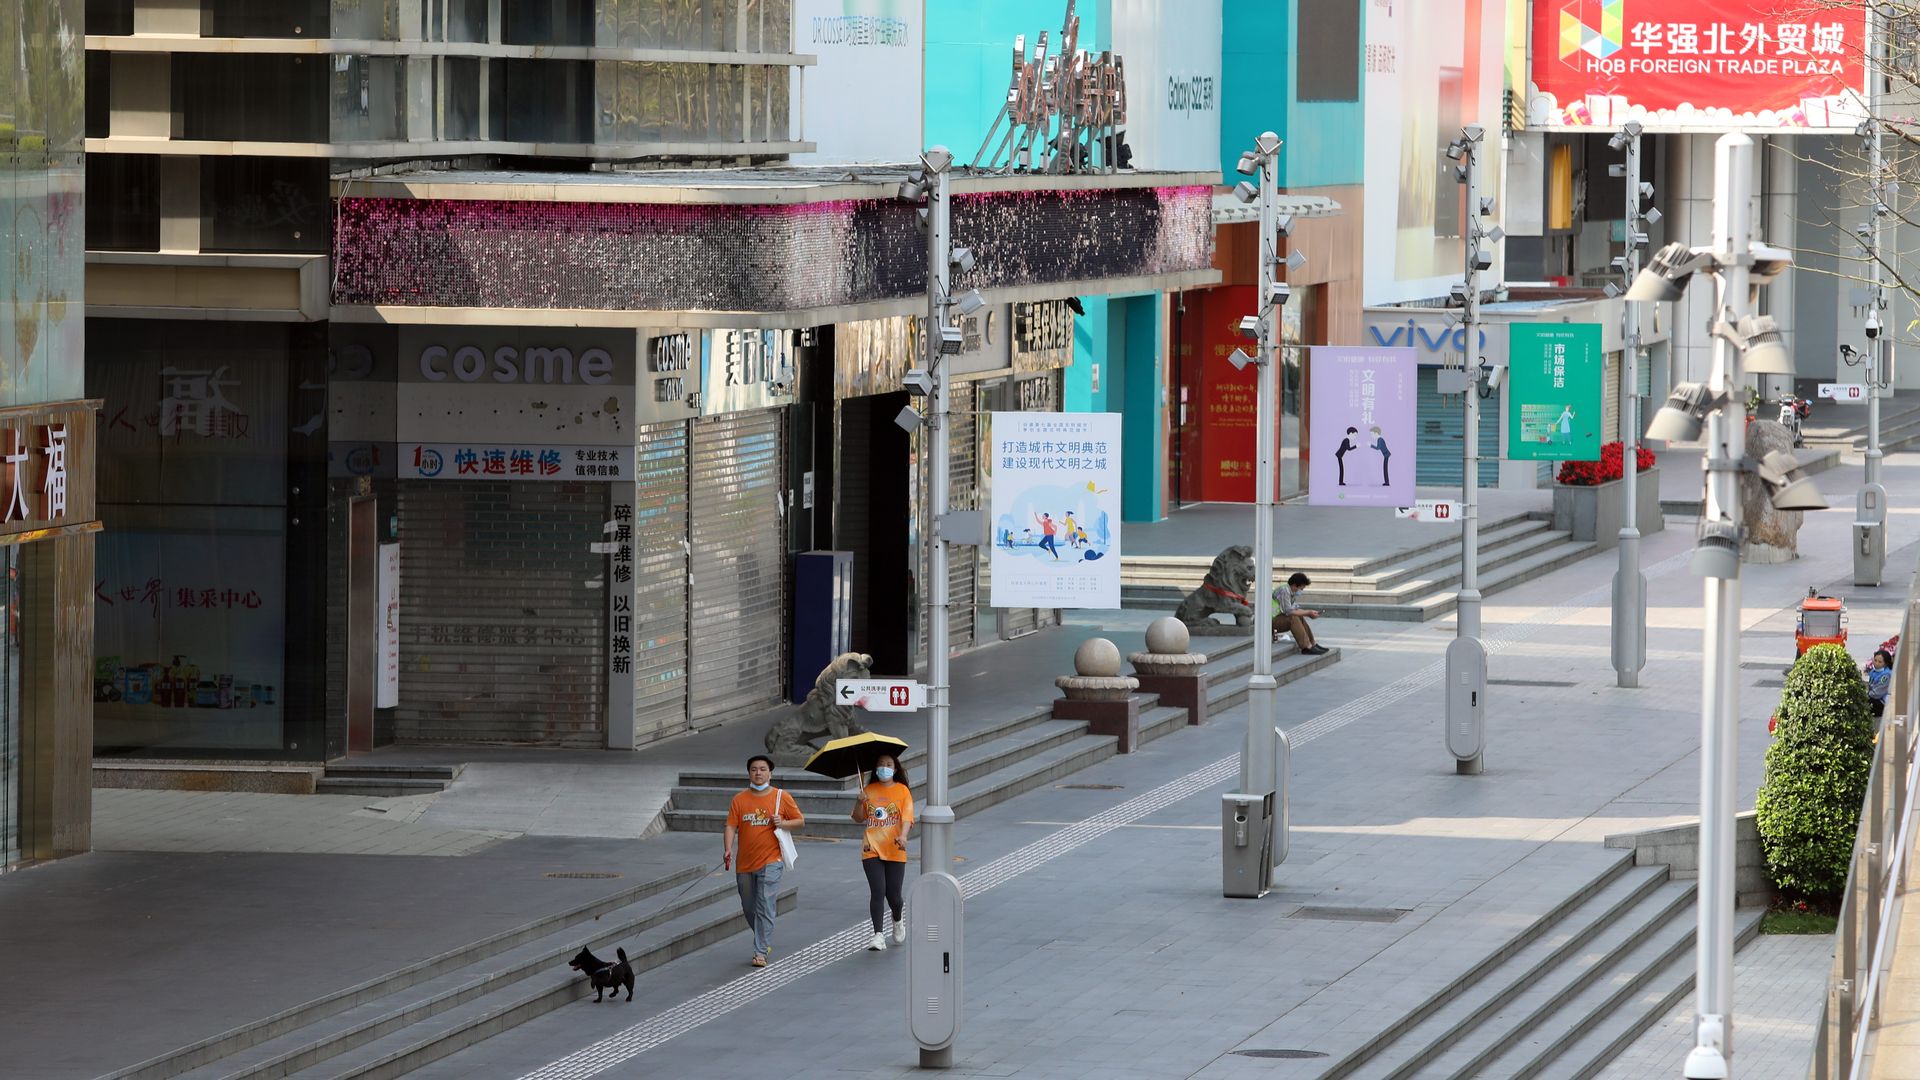 Two pedestrians walk down a deserted city street